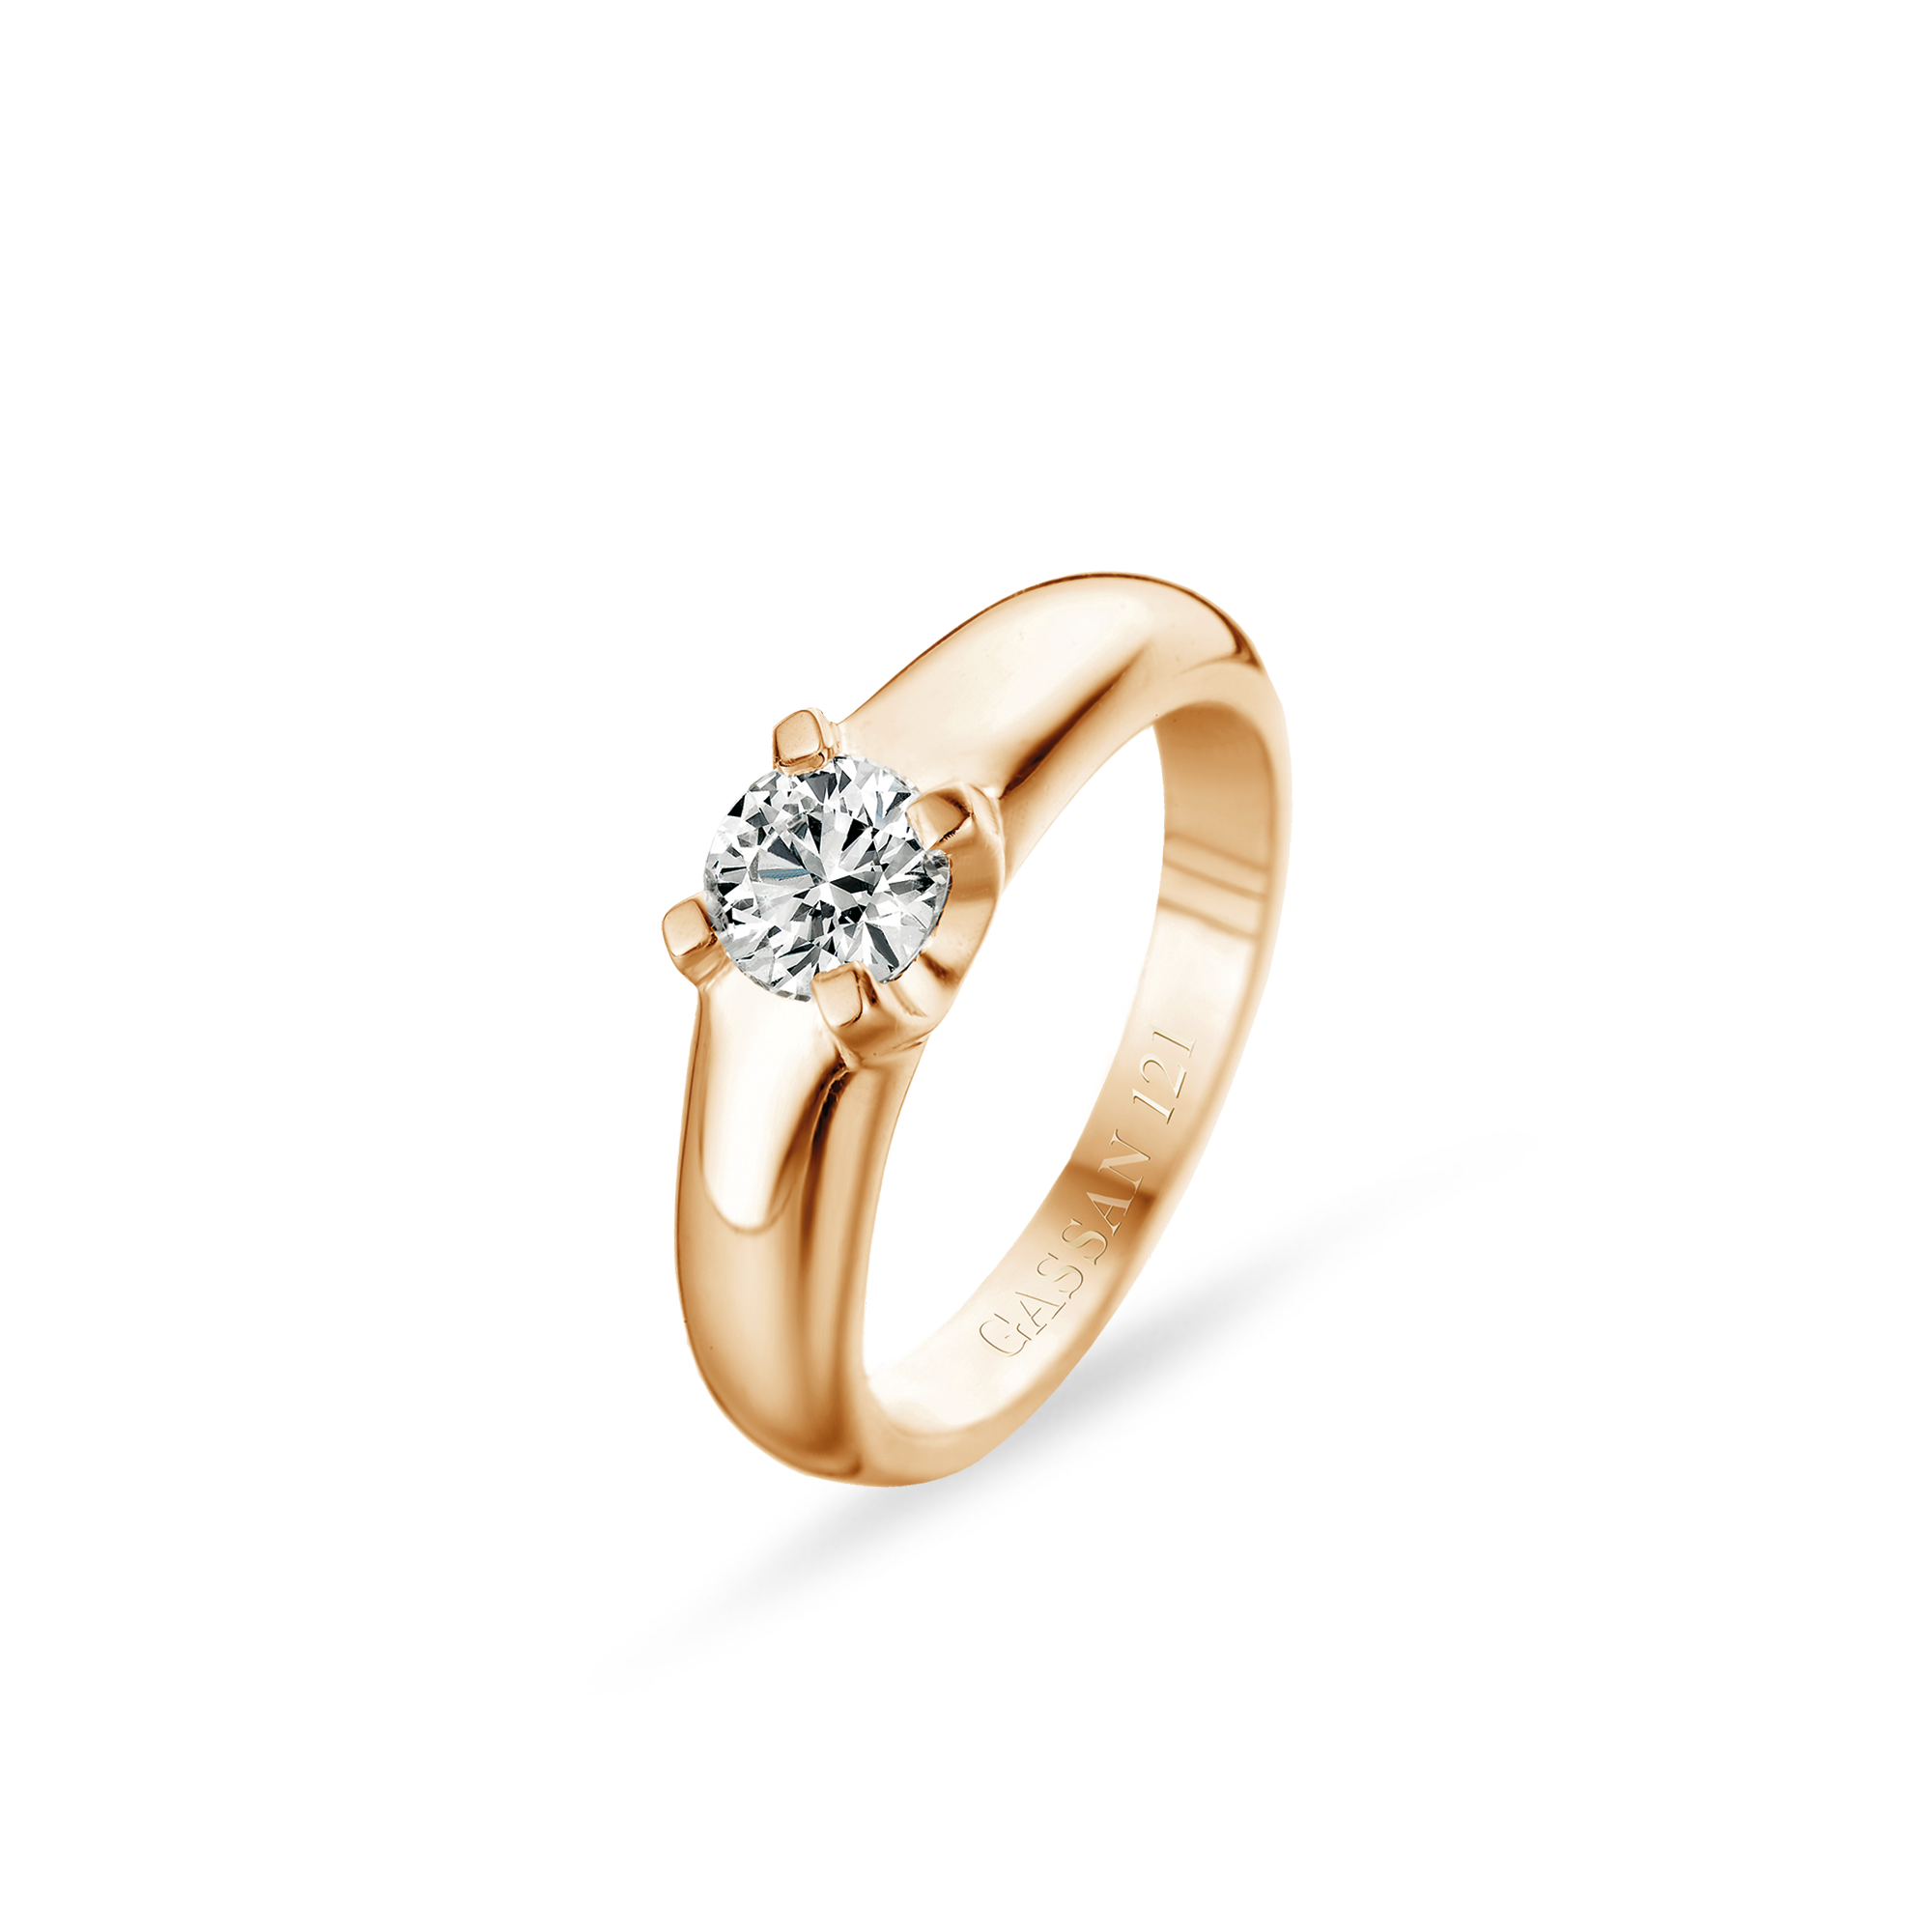 Golden Wedding Ring PNG Transparent, Golden Wedding Ring Vector, Wedding  Clipart, Golden Wedding Ring, Wedding Ring Vector PNG Image For Free  Download | Ring, Vector